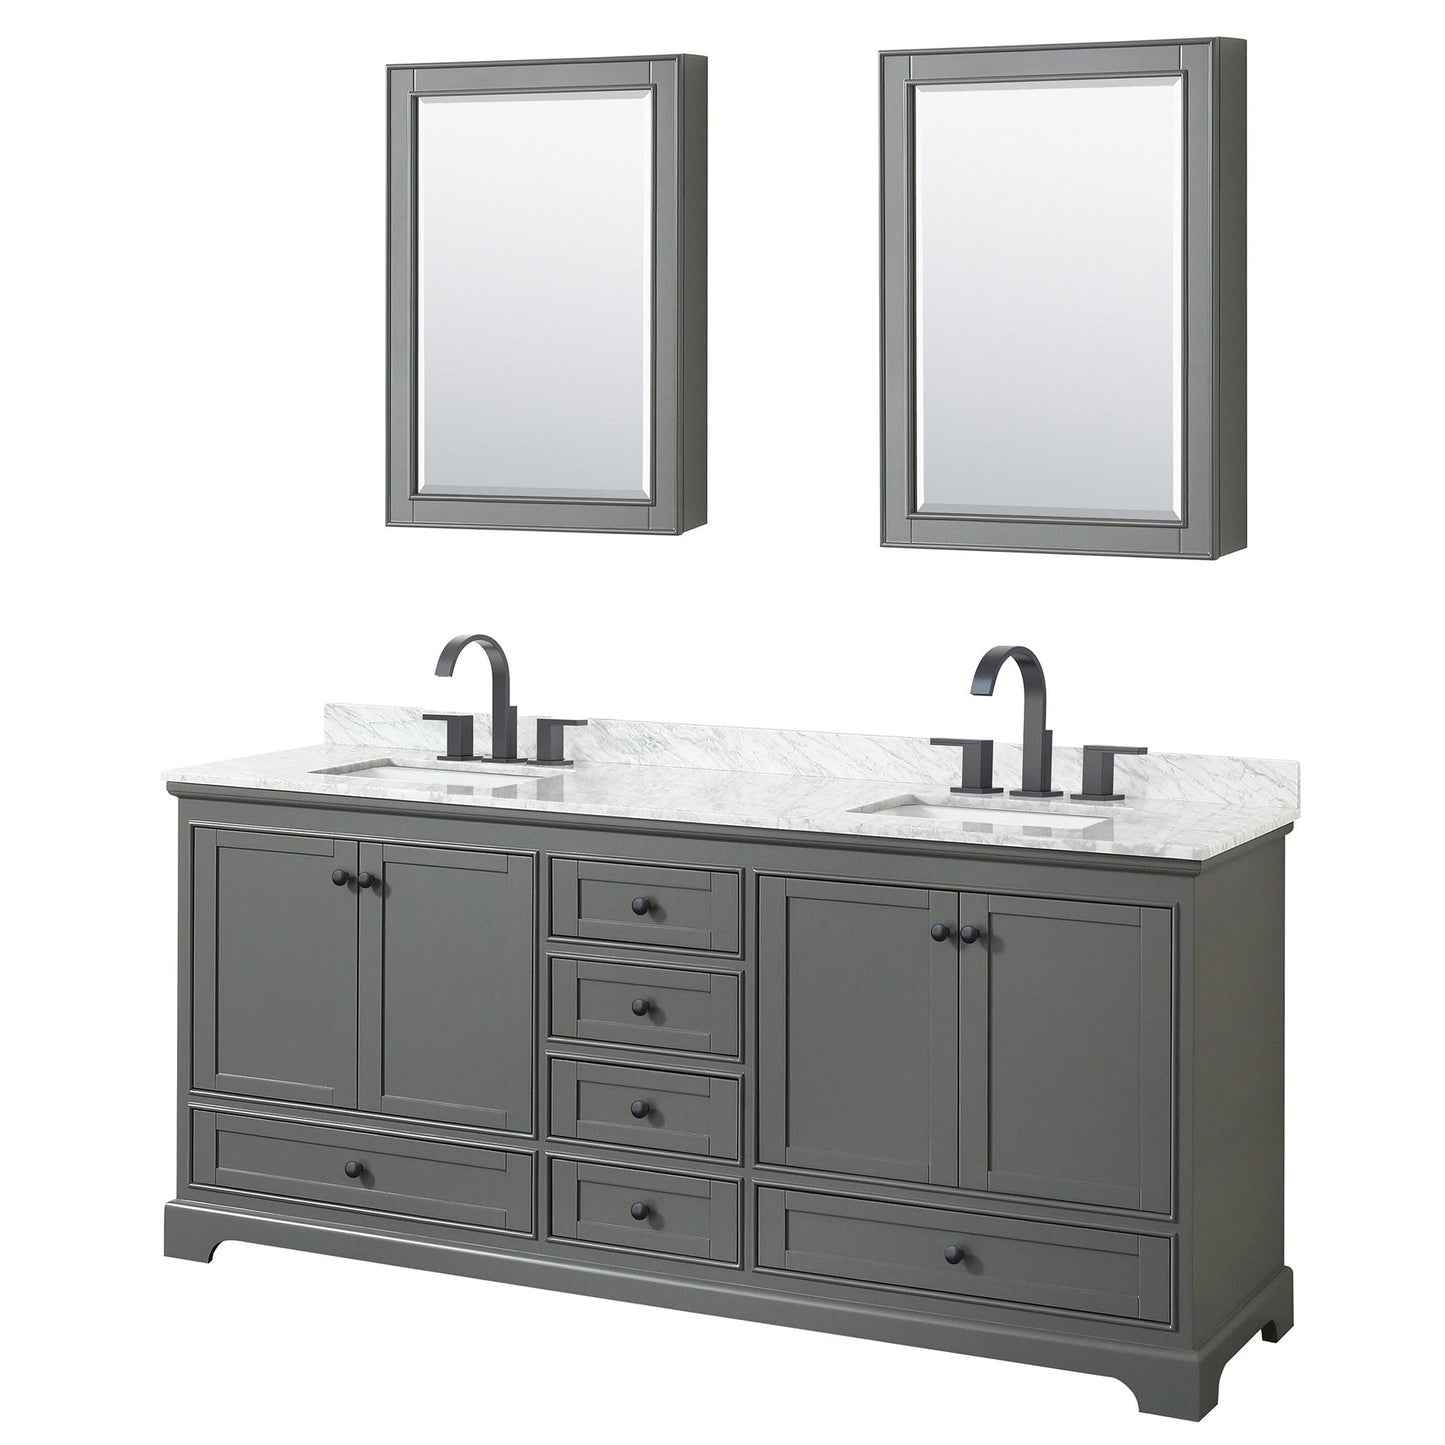 Deborah 80" Double Bathroom Vanity in Dark Gray, White Carrara Marble Countertop, Undermount Square Sinks, Matte Black Trim, Medicine Cabinets